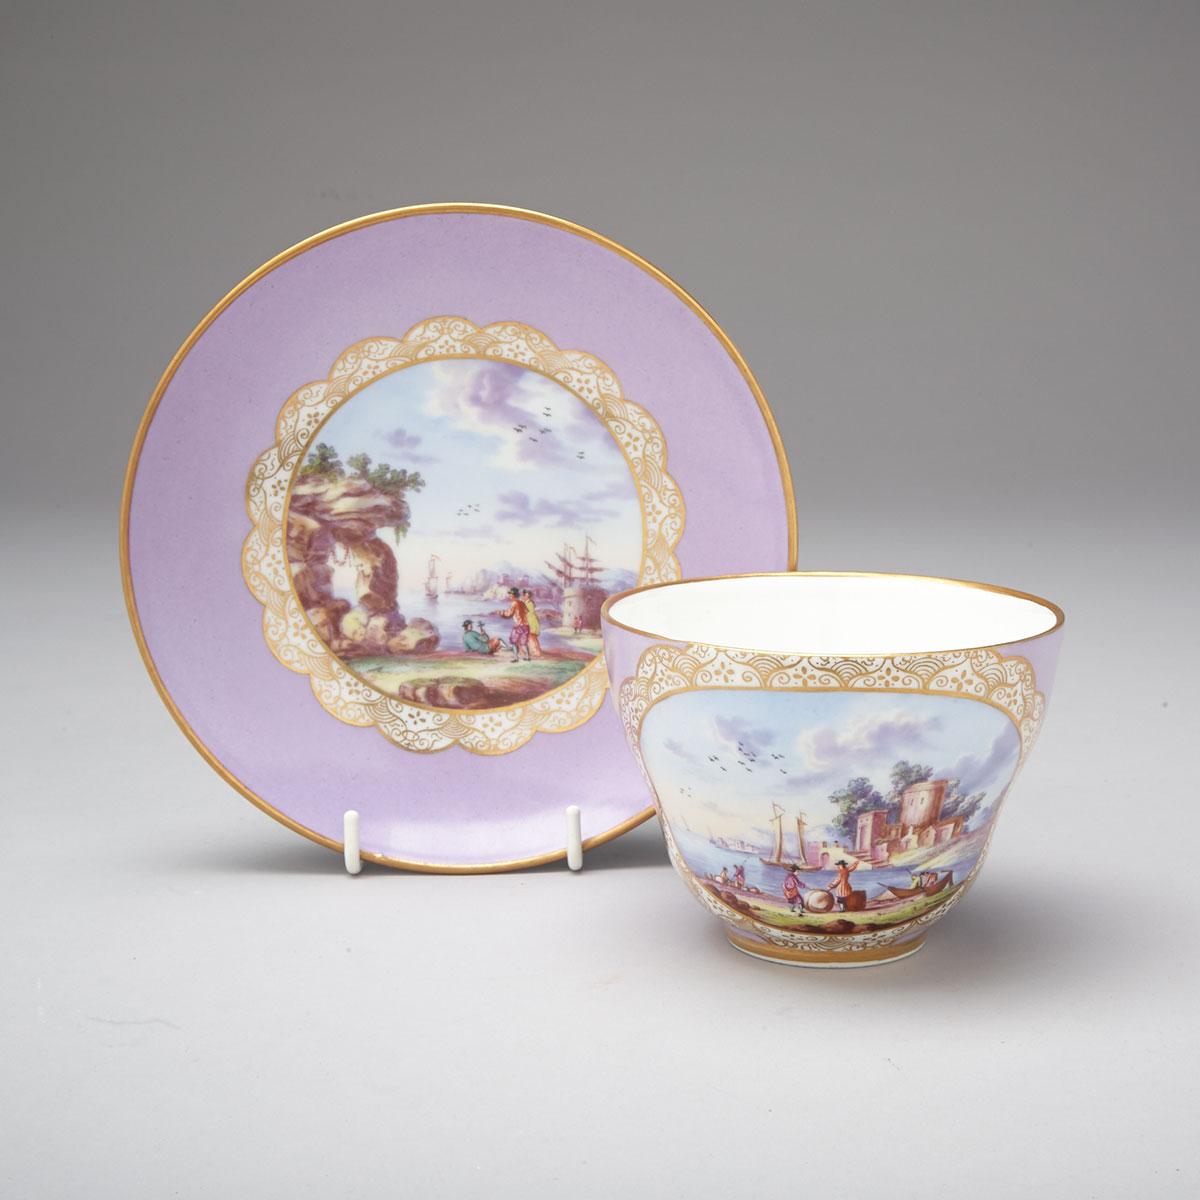 Meissen Lavender Ground Breakfast Cup and Saucer, 19th century